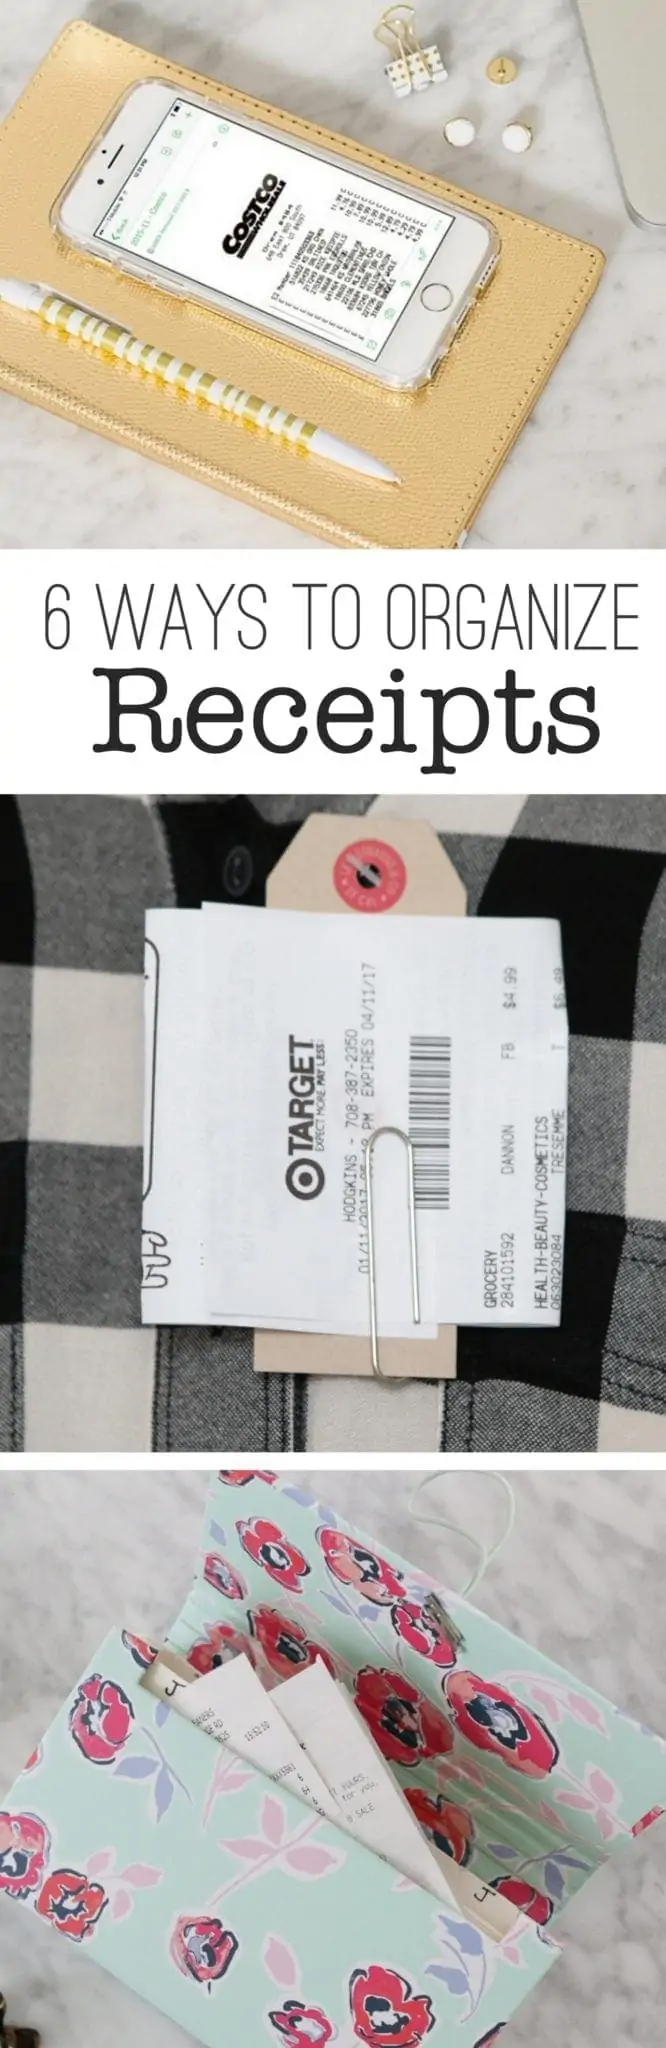 6 ways to organize receipts